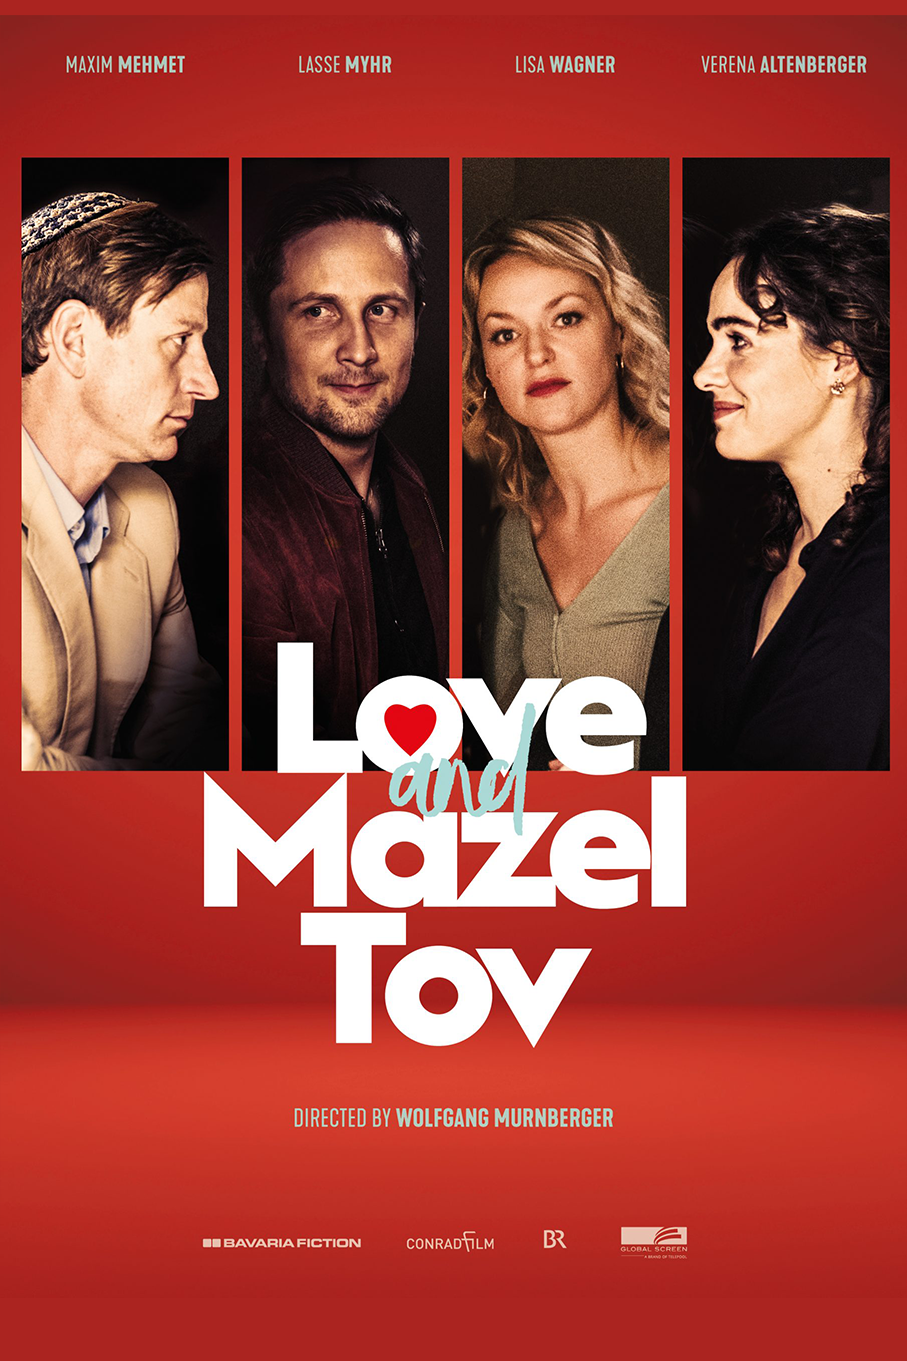 LOVE & MAZEL TOV